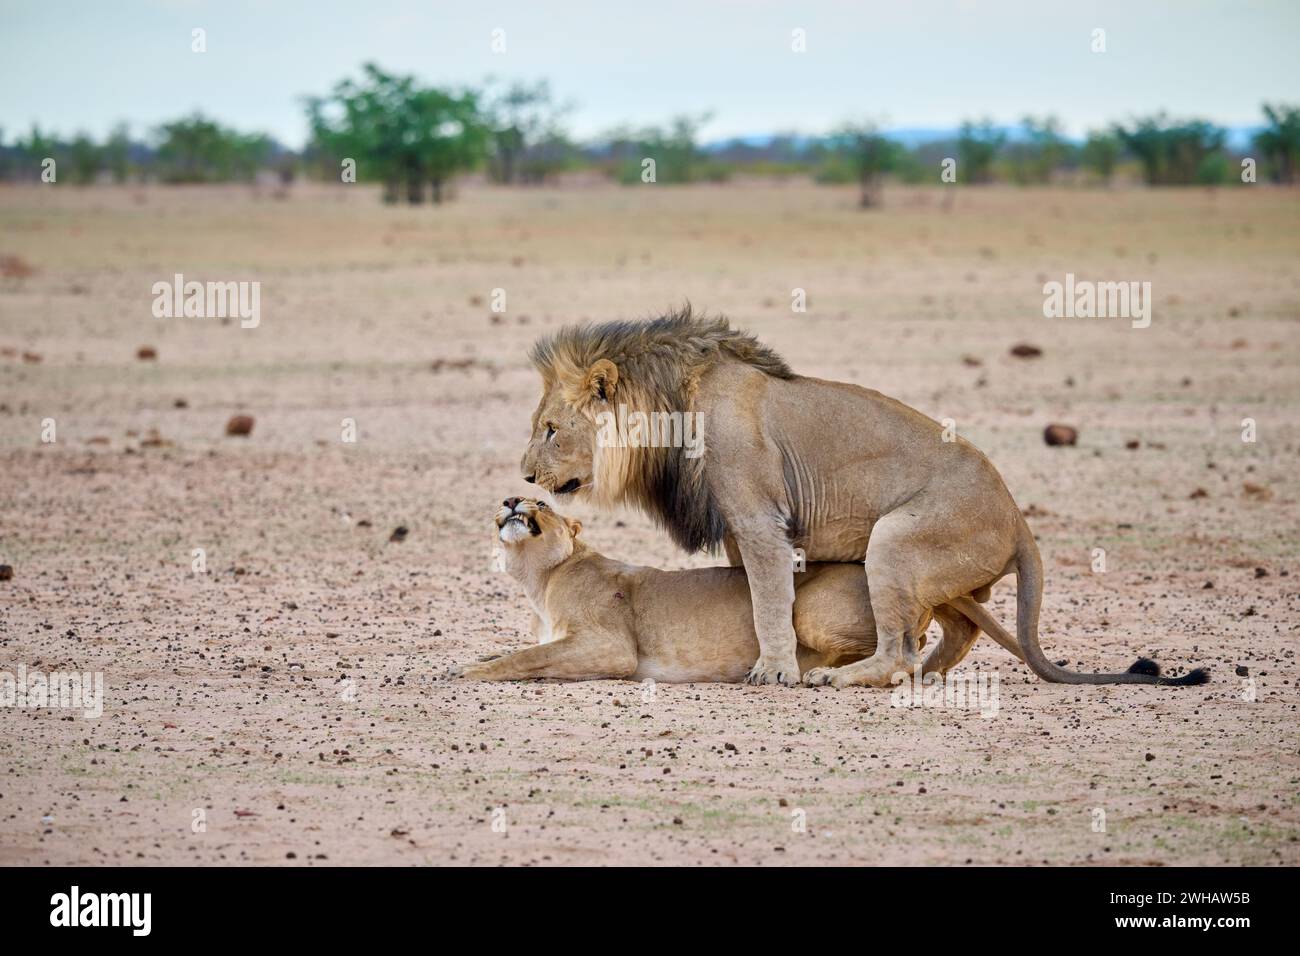 Coppia di leoni accoppiati, Parco Nazionale di Etosha, Namibia, Africa Foto Stock